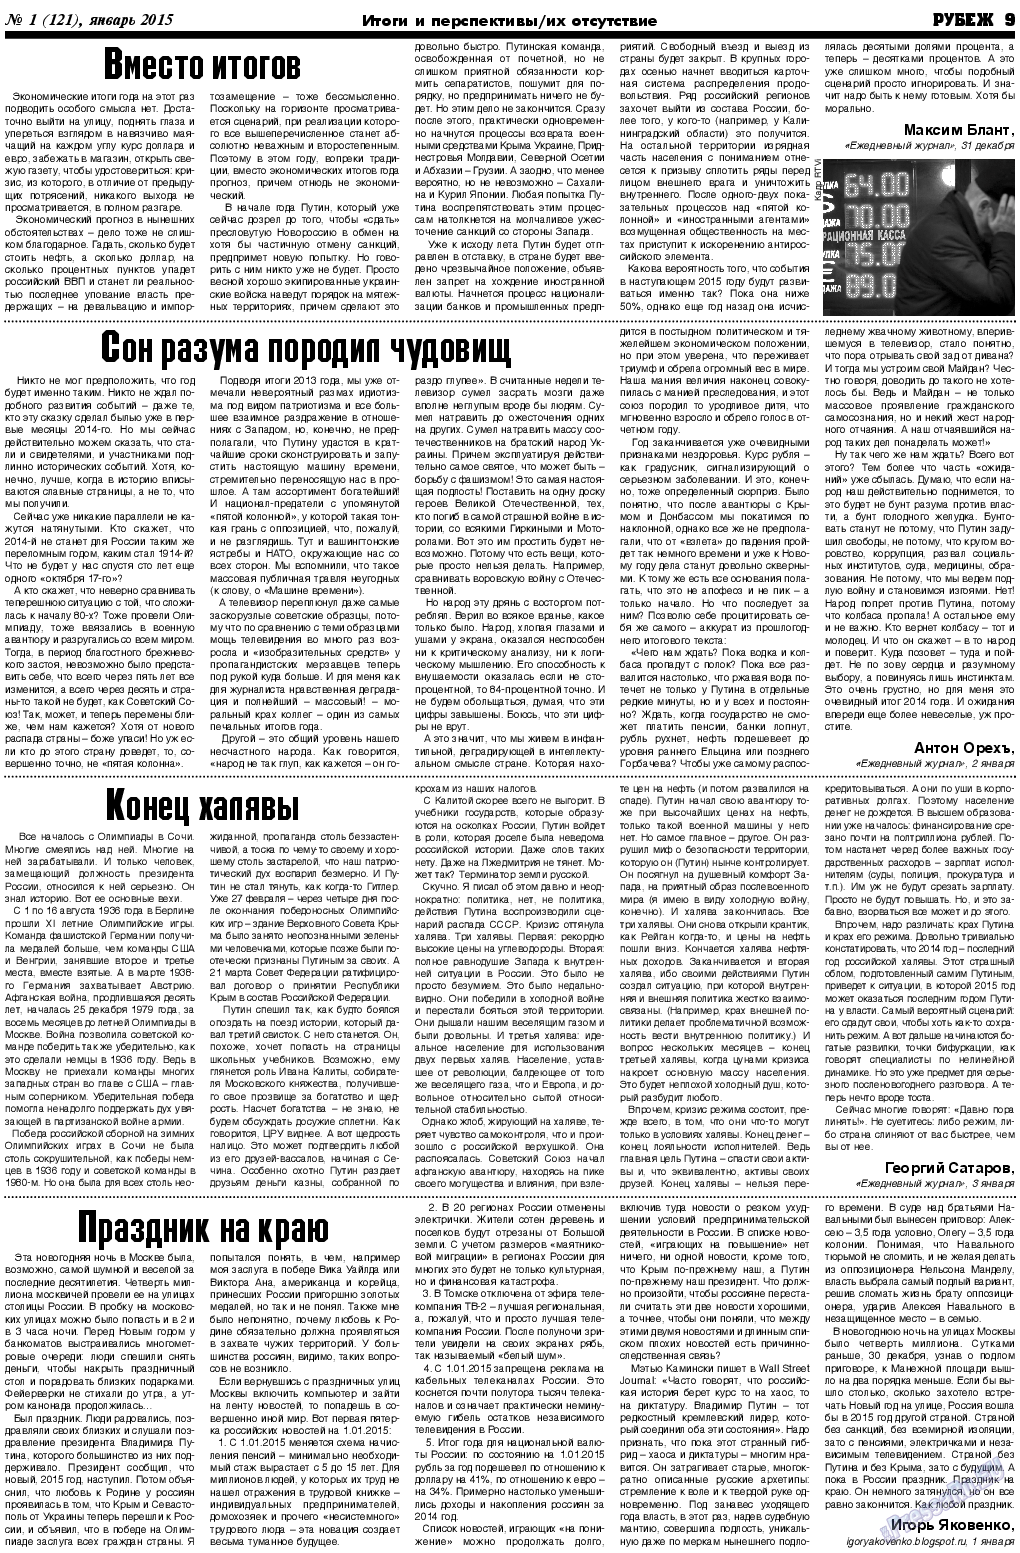 Рубеж, газета. 2015 №1 стр.9